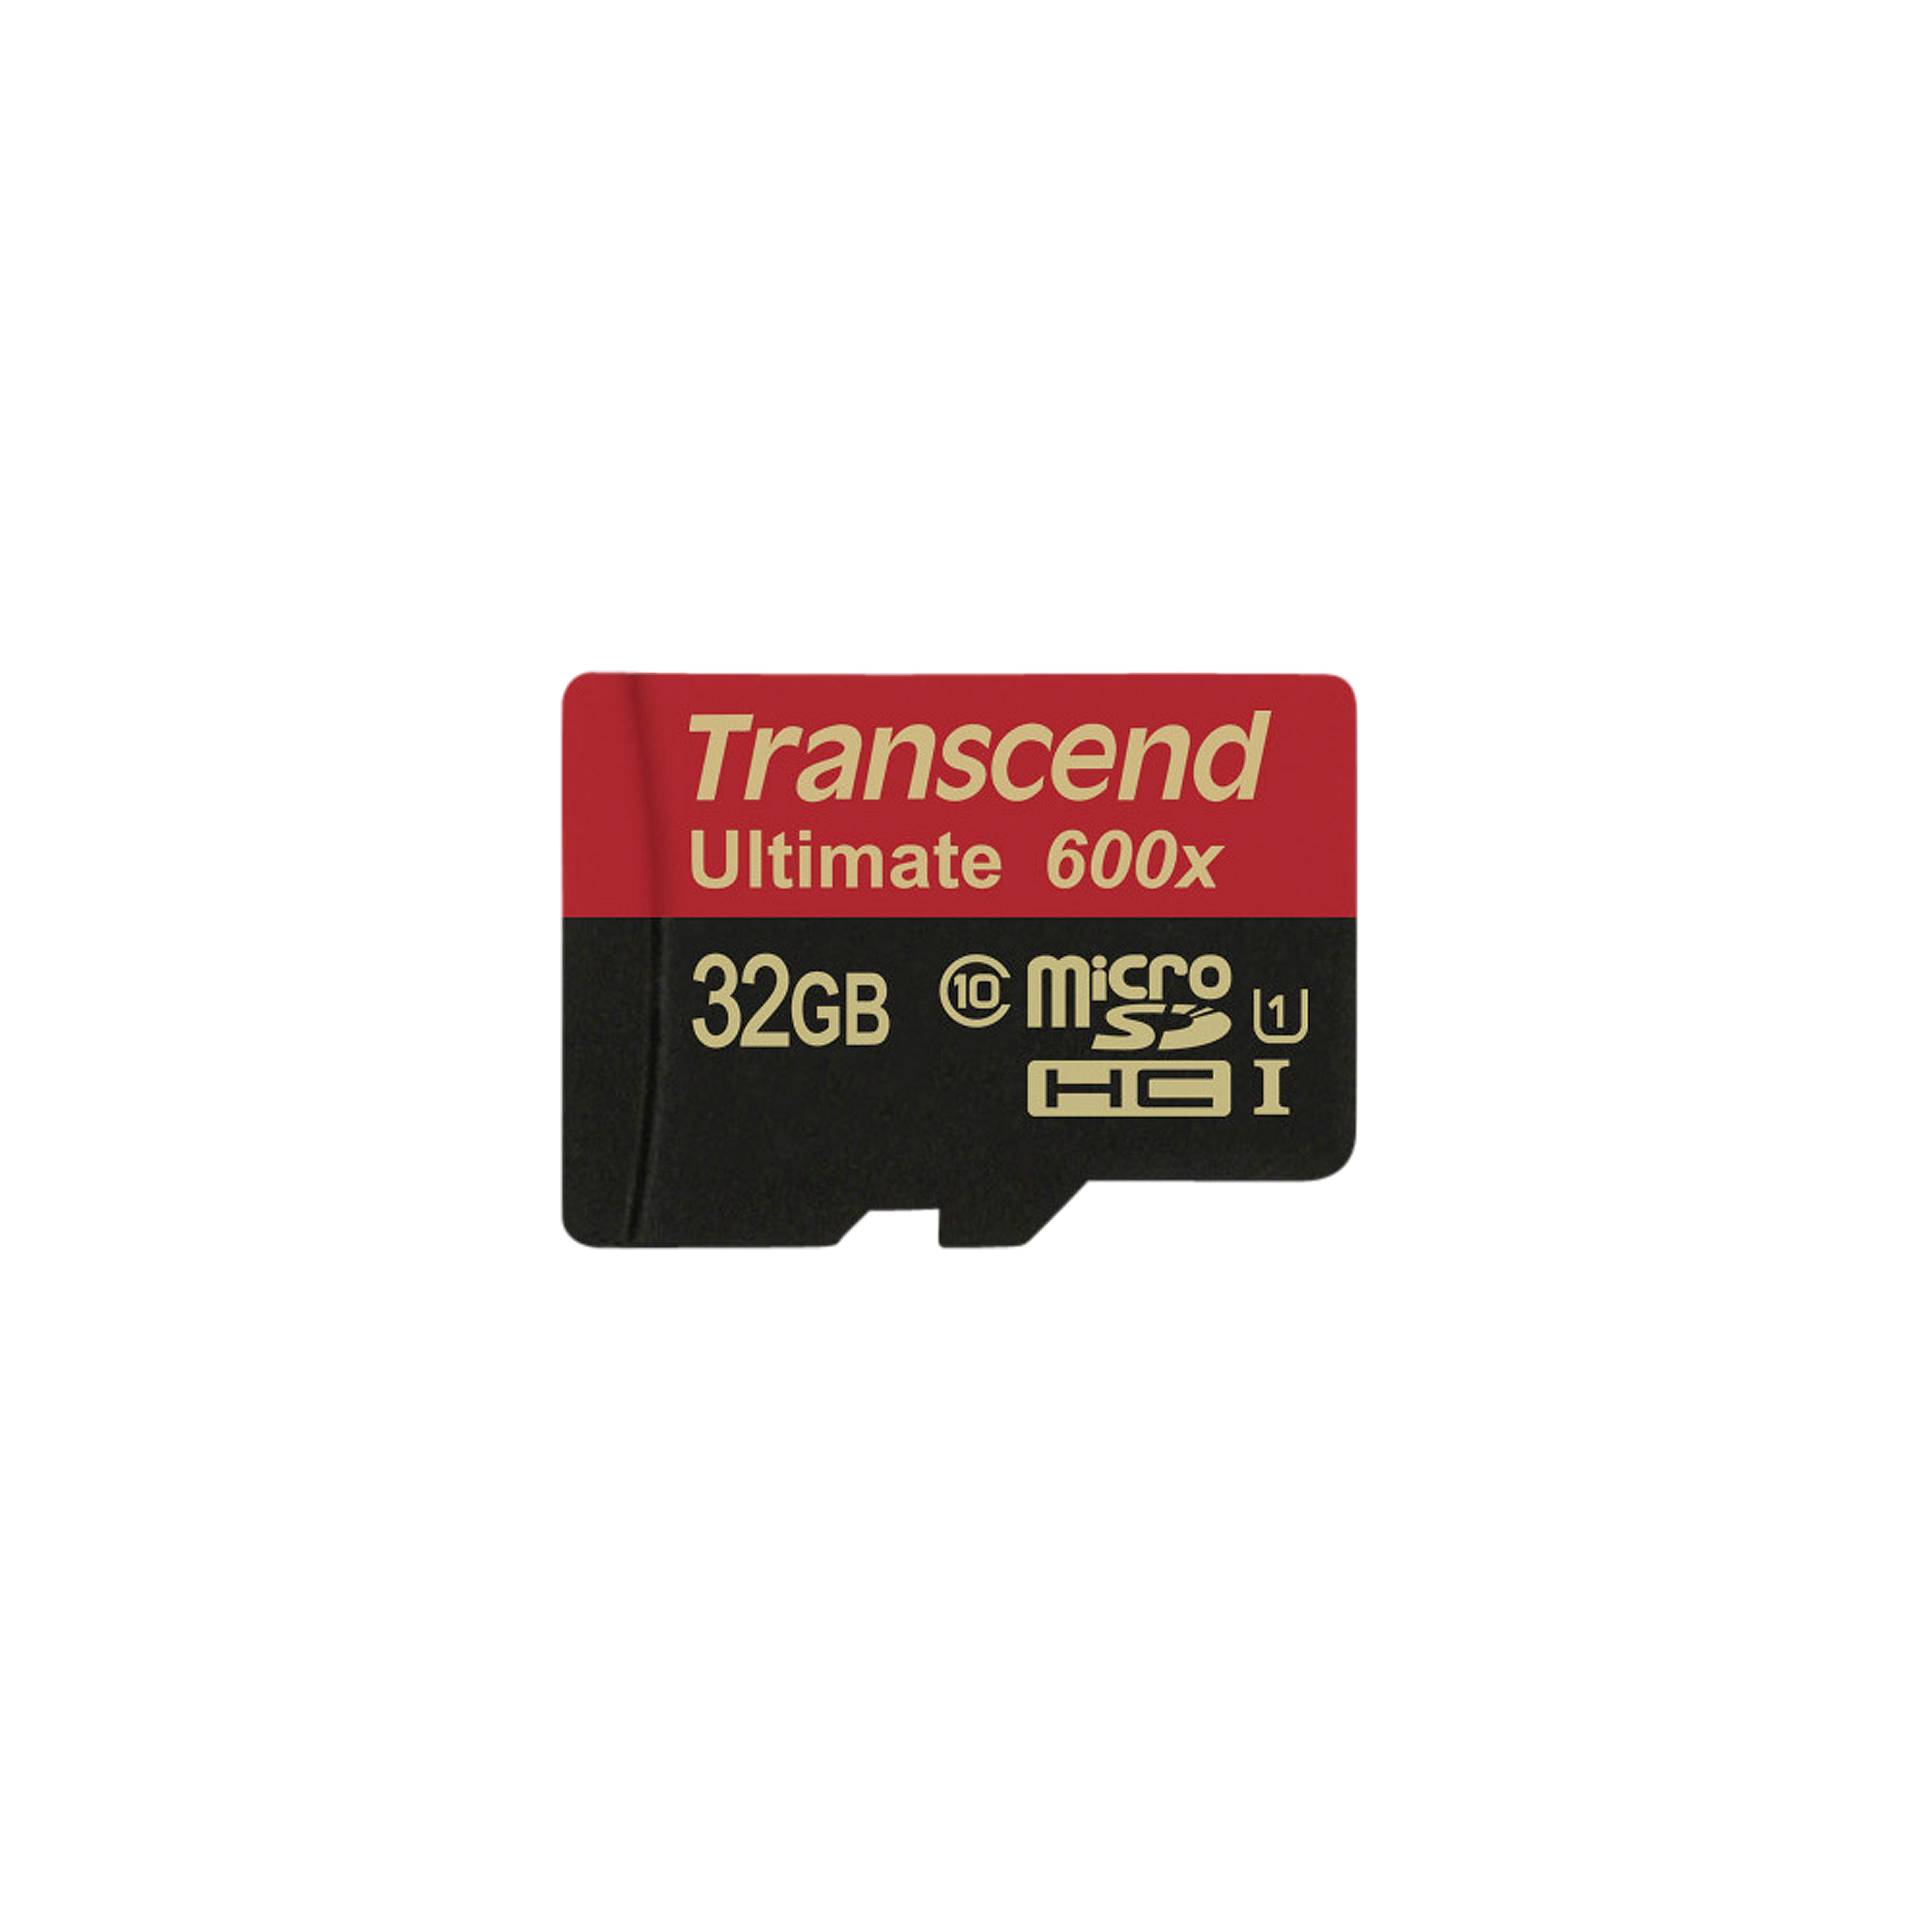 Transcend microSDHC 32GB Class 10 UHS-I MLC 600x + Adattat.S